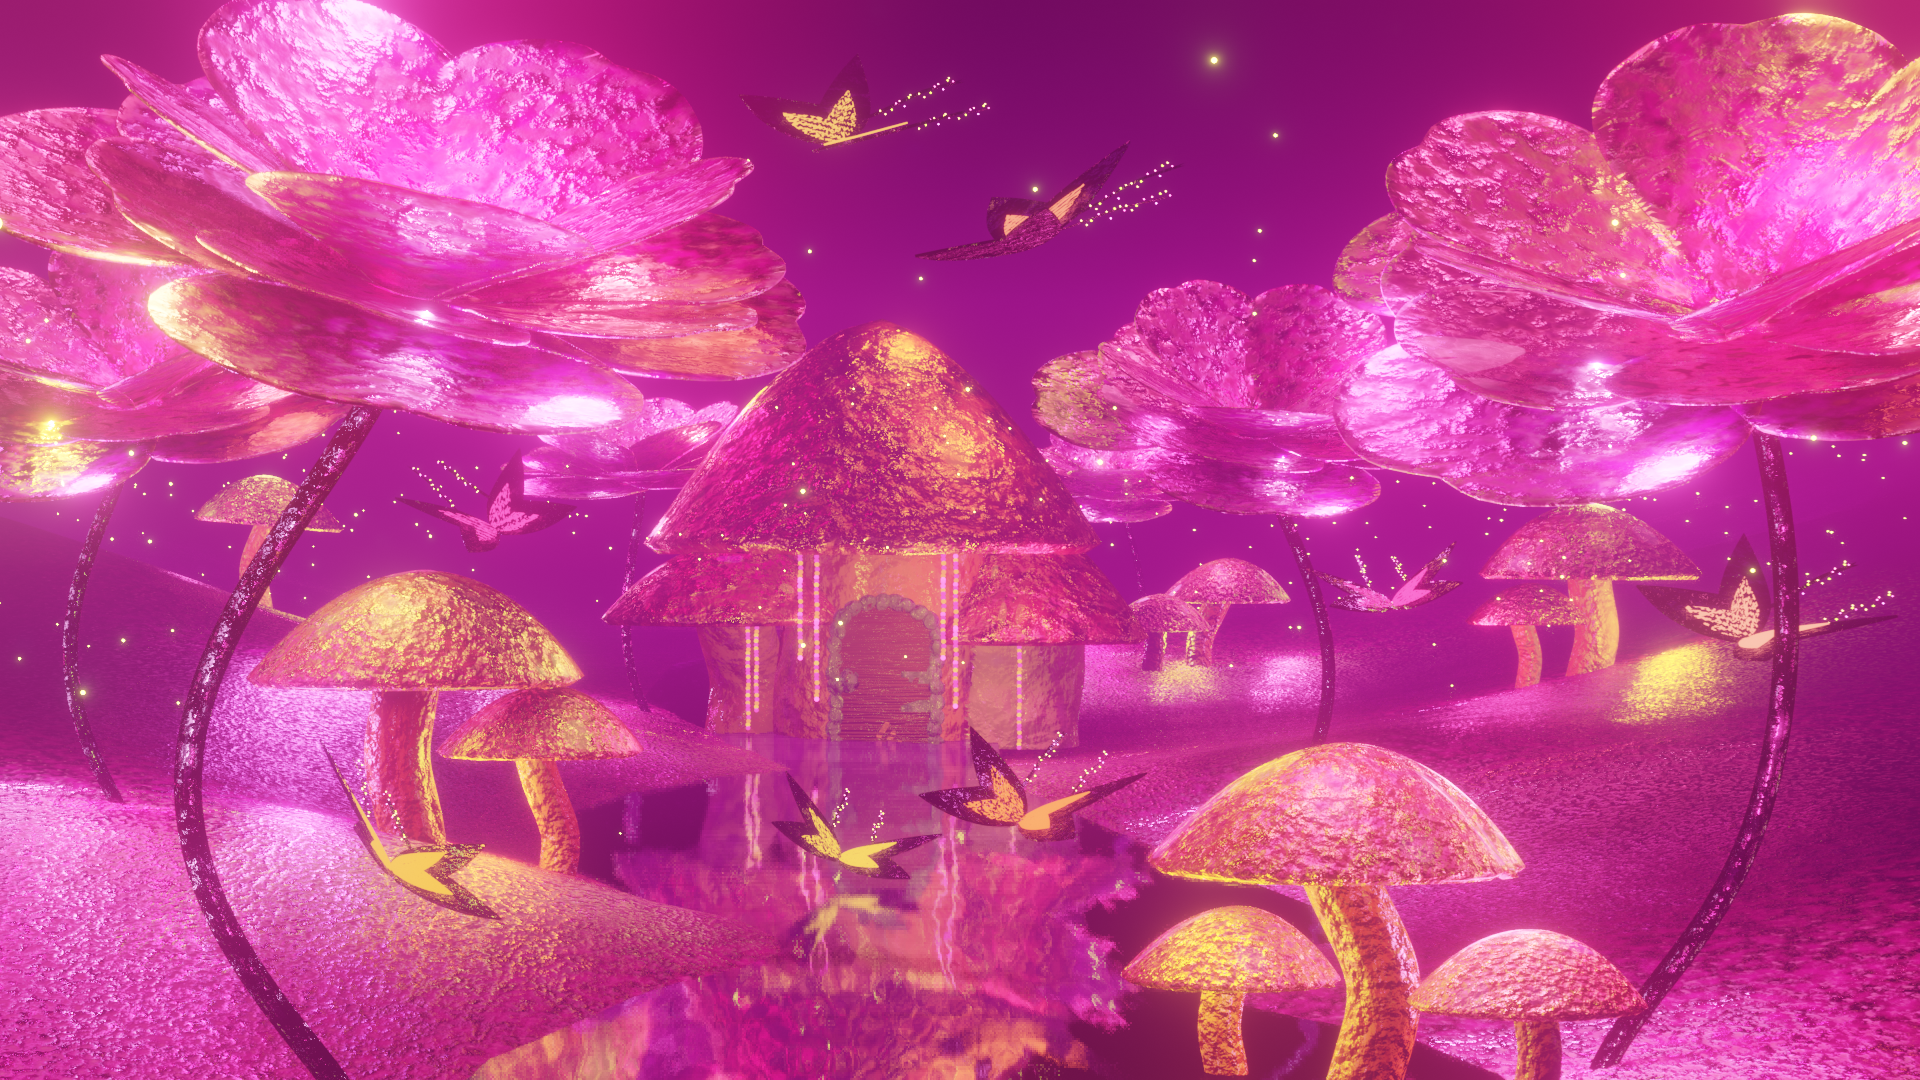 Enchanted Garden of the Fairies preview image 1